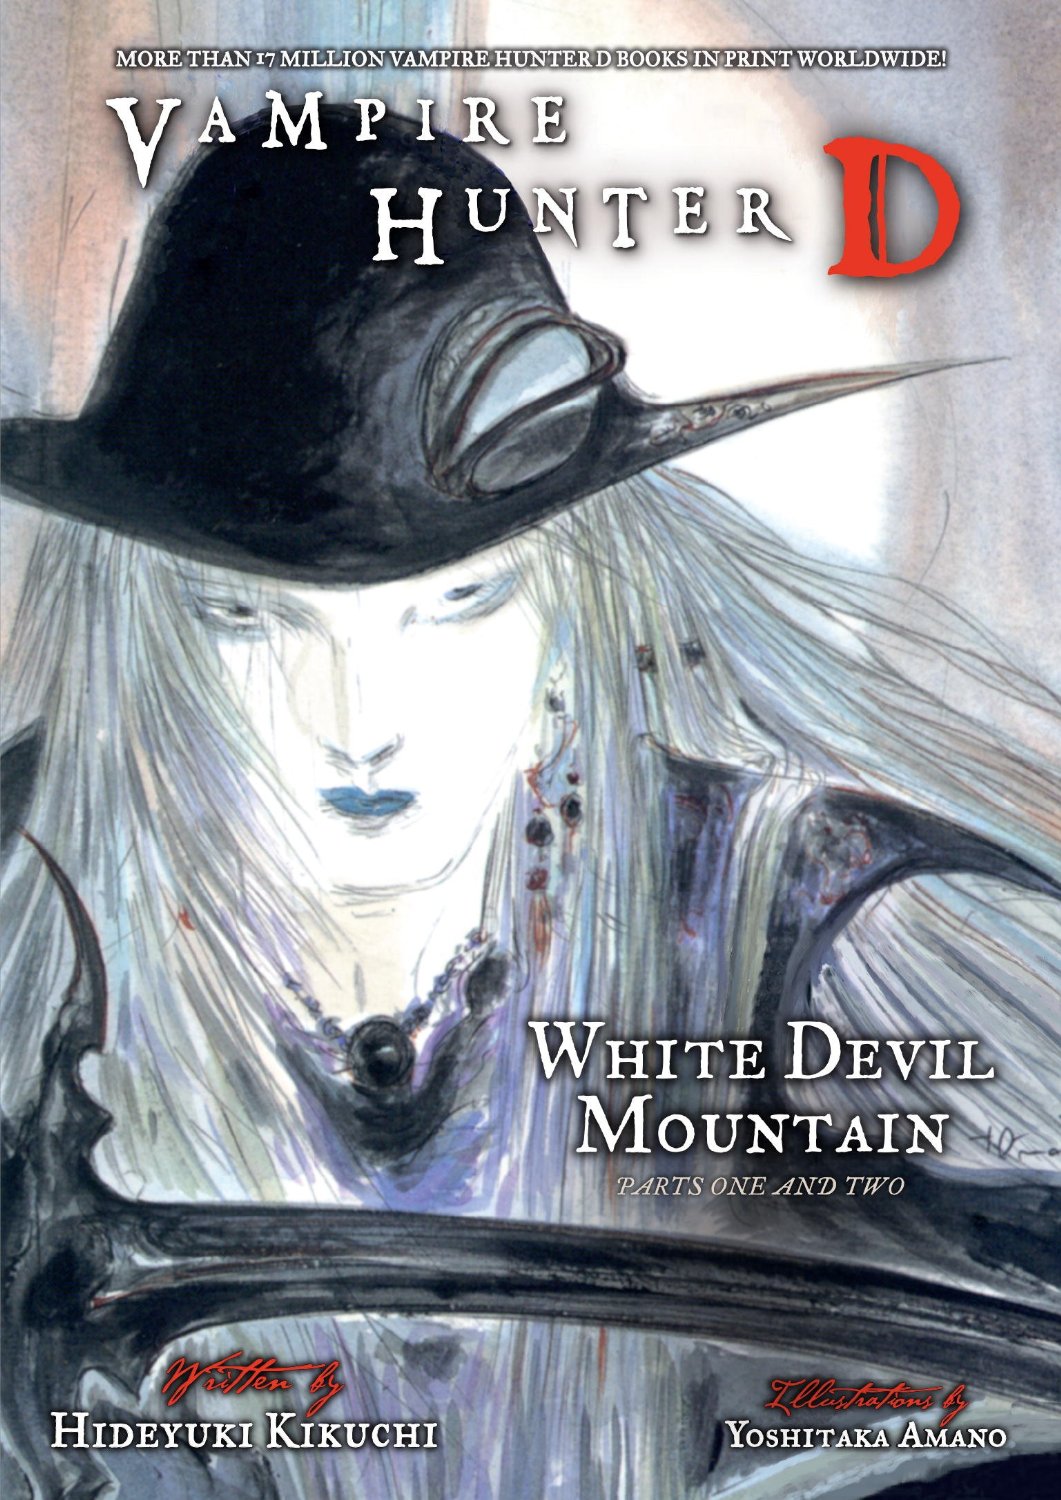 White Devil Mountain by Hideyuki Kikuchi